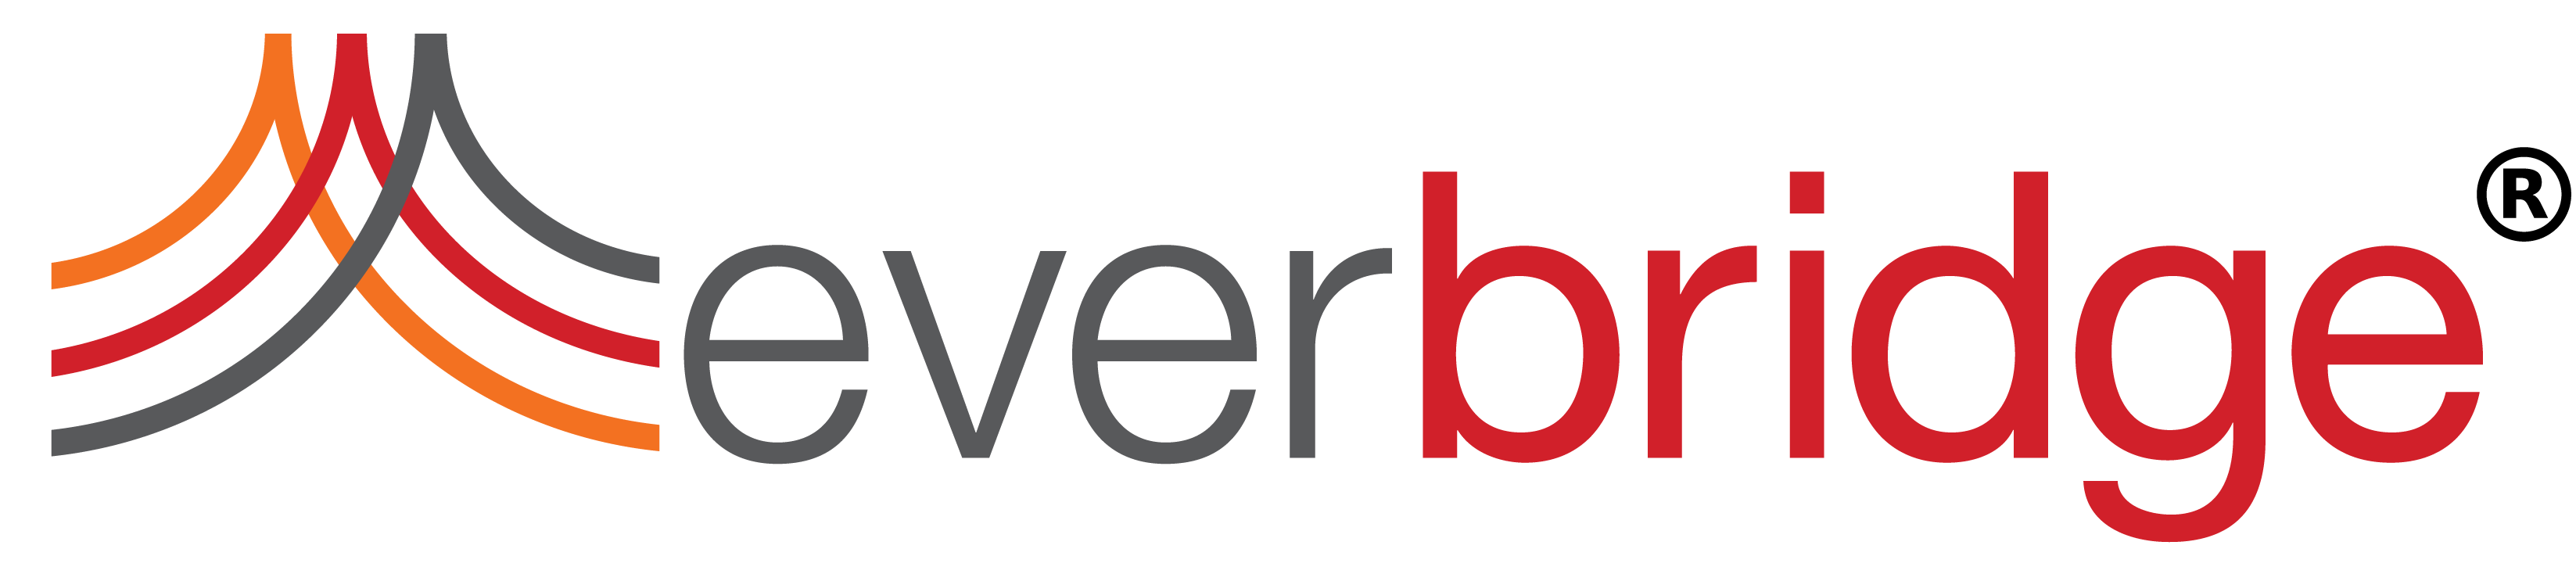 everbridge_logo_new (1)